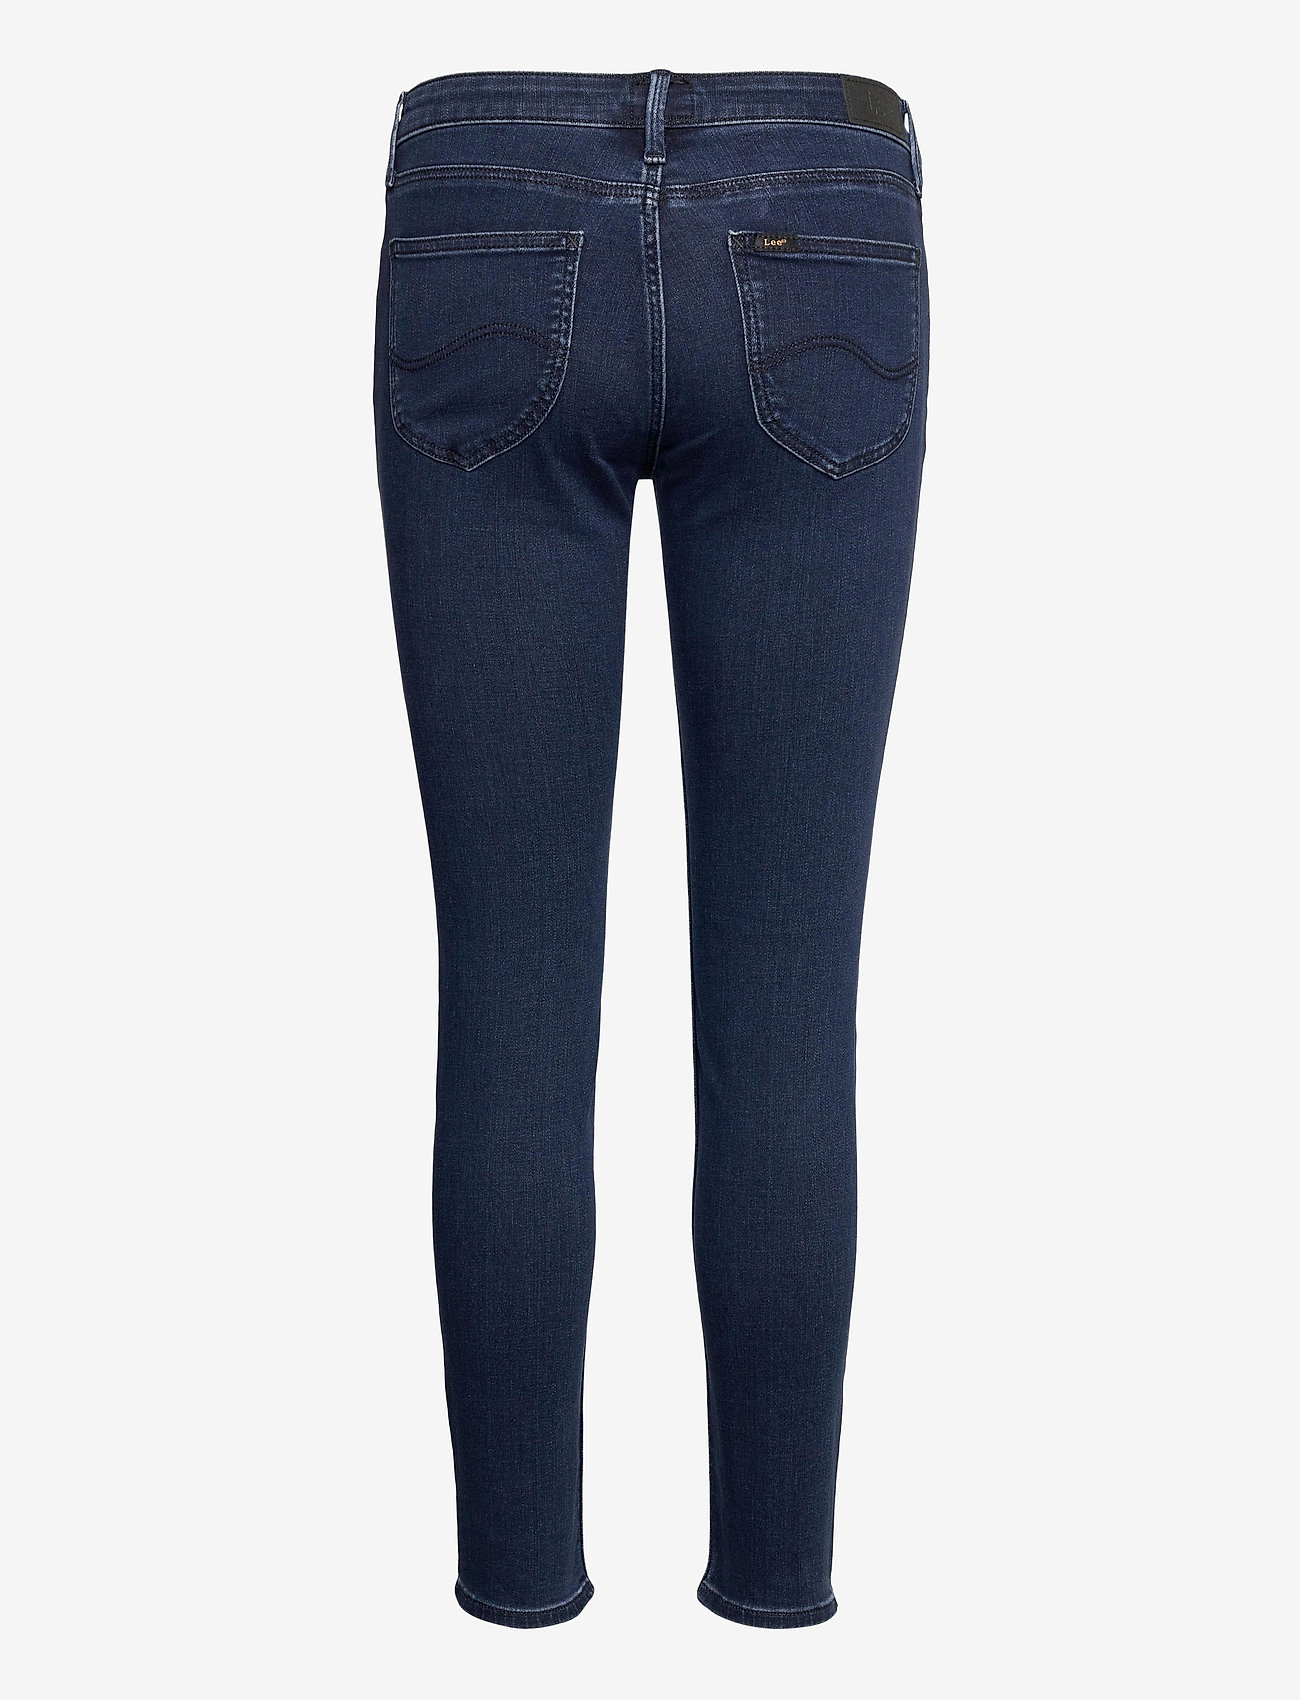 Lee Jeans - SCARLETT - skinny jeans - dark joni - 1